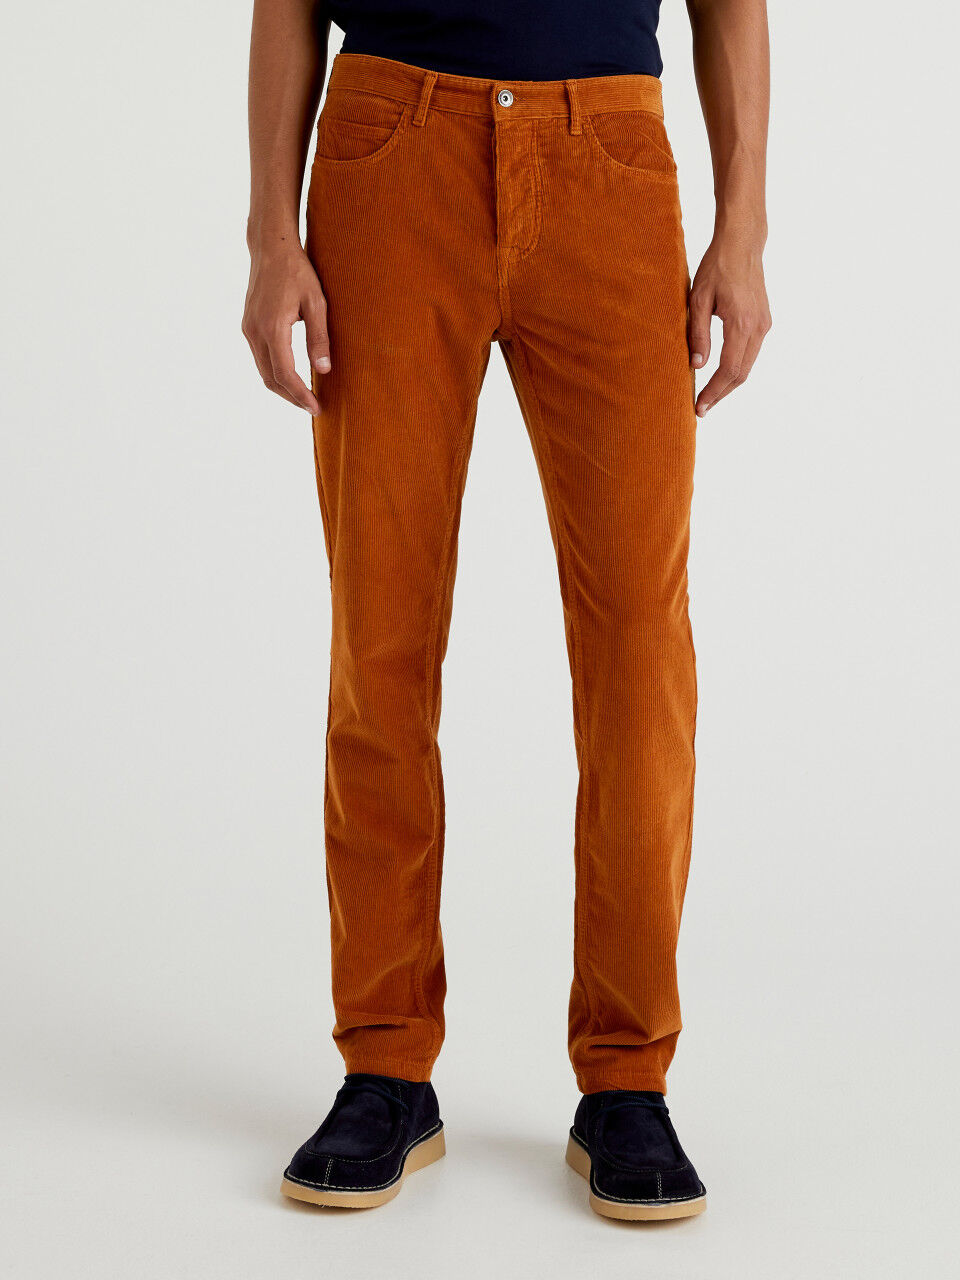 eczipvz Mens SweatPants Men's Solid pant Hiking Trousers Windproof Work  Trousers Warm Trousers Pockets Outdoor Fitness pant Orange,XL - Walmart.com